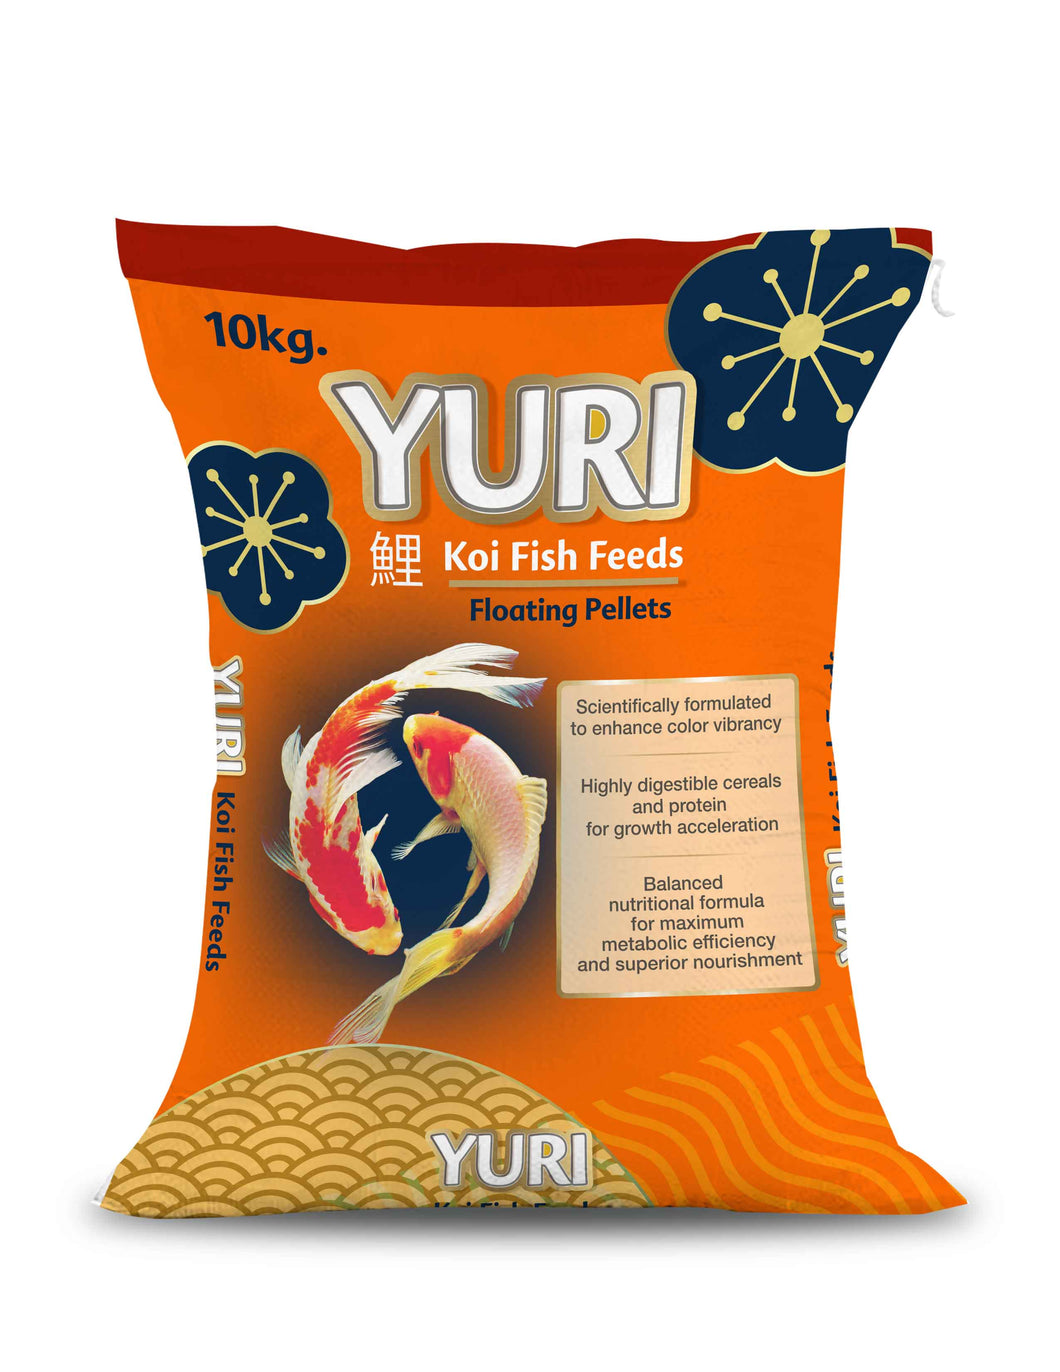 Yuri Koi Fish Feeds - Floating Pellets, 10kg